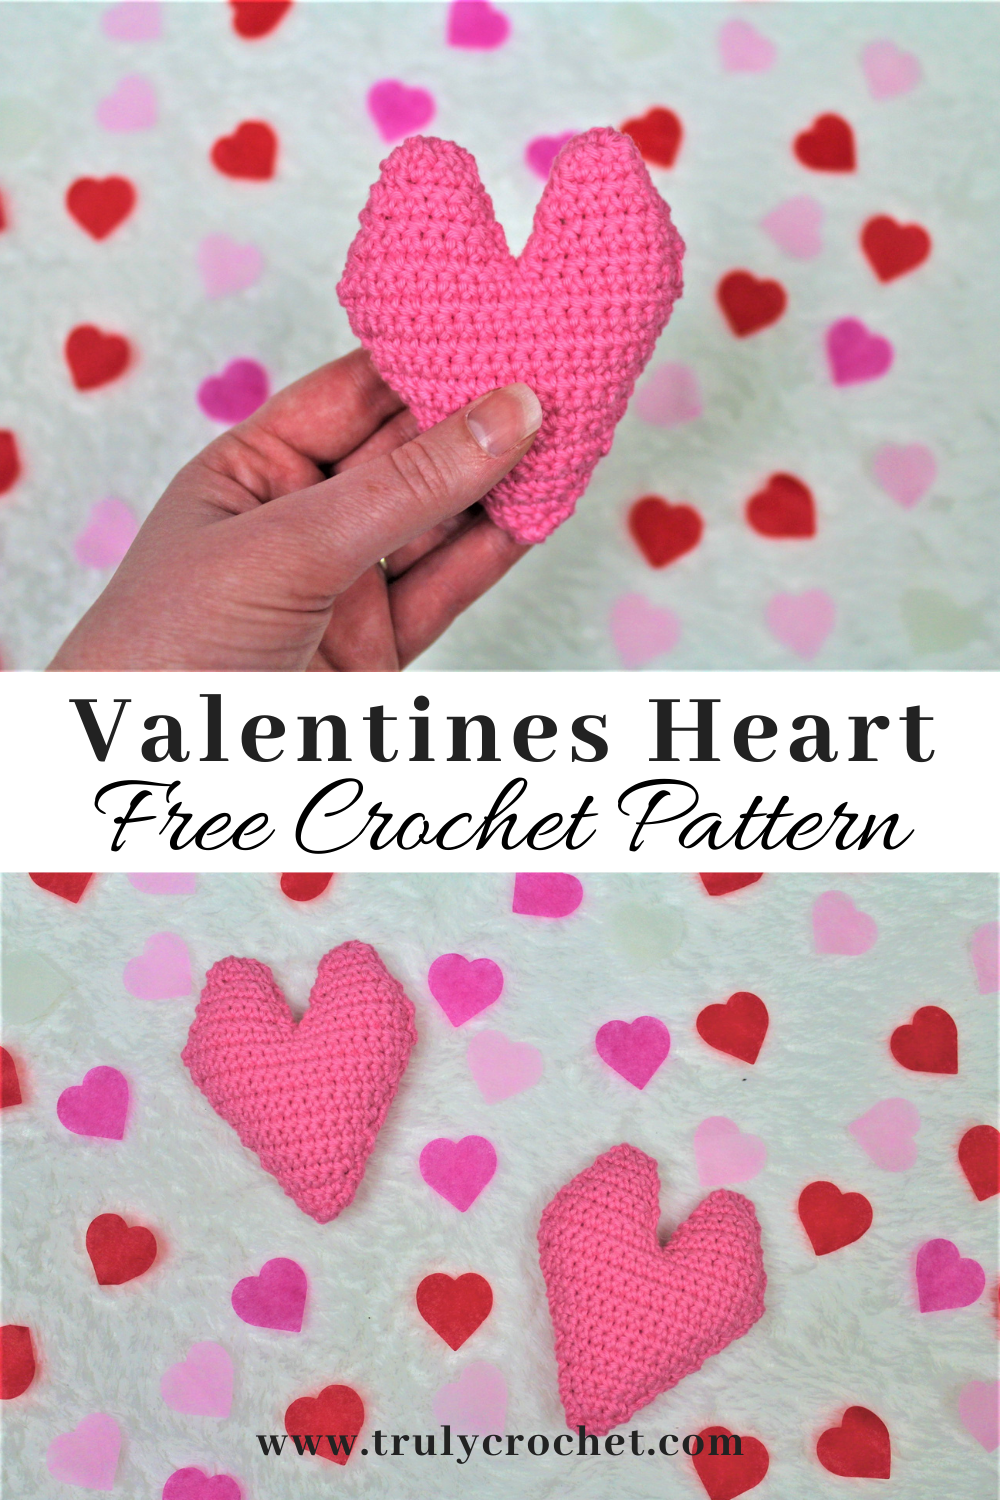 Pinterest Pin - Valentines Heart